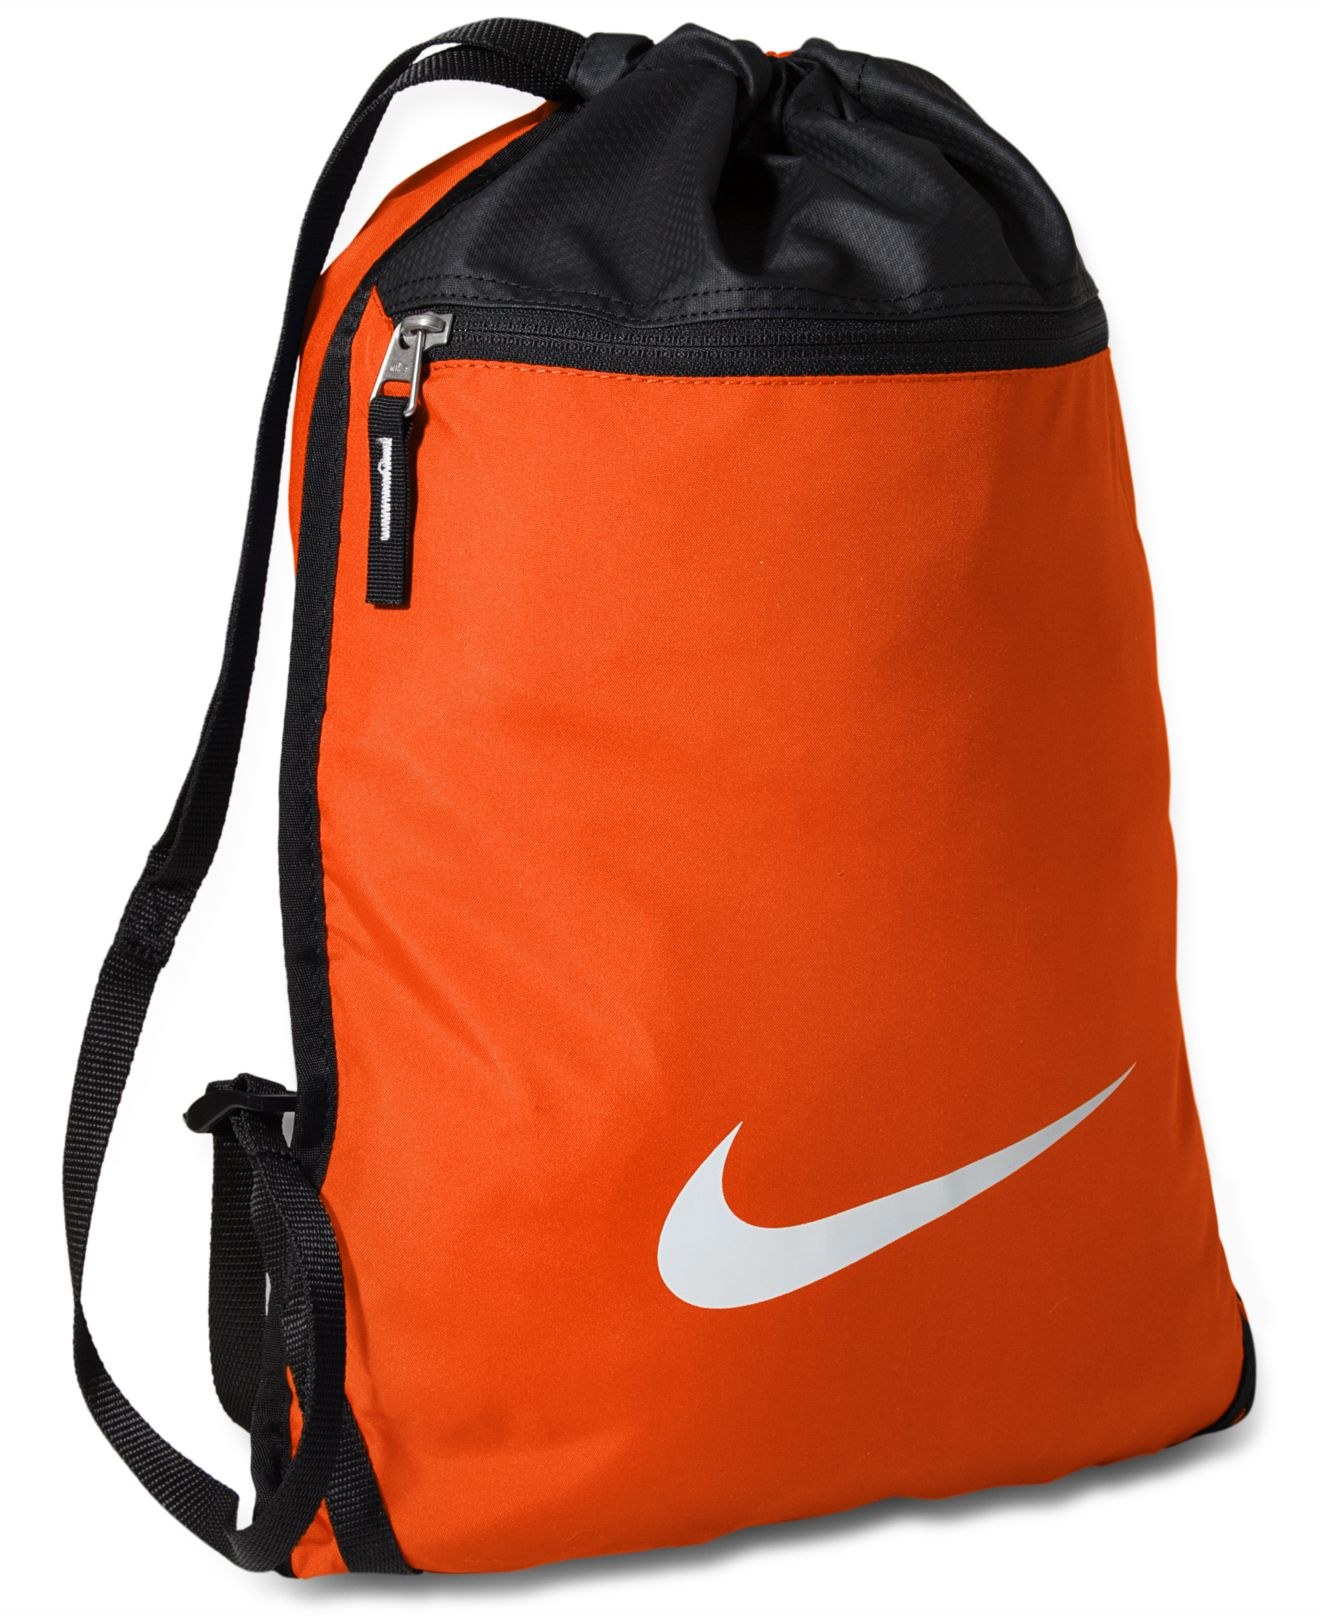 Nike Synthetic Team Training Gymsack Bag in Midnight Navy (Blue) for Men - Lyst